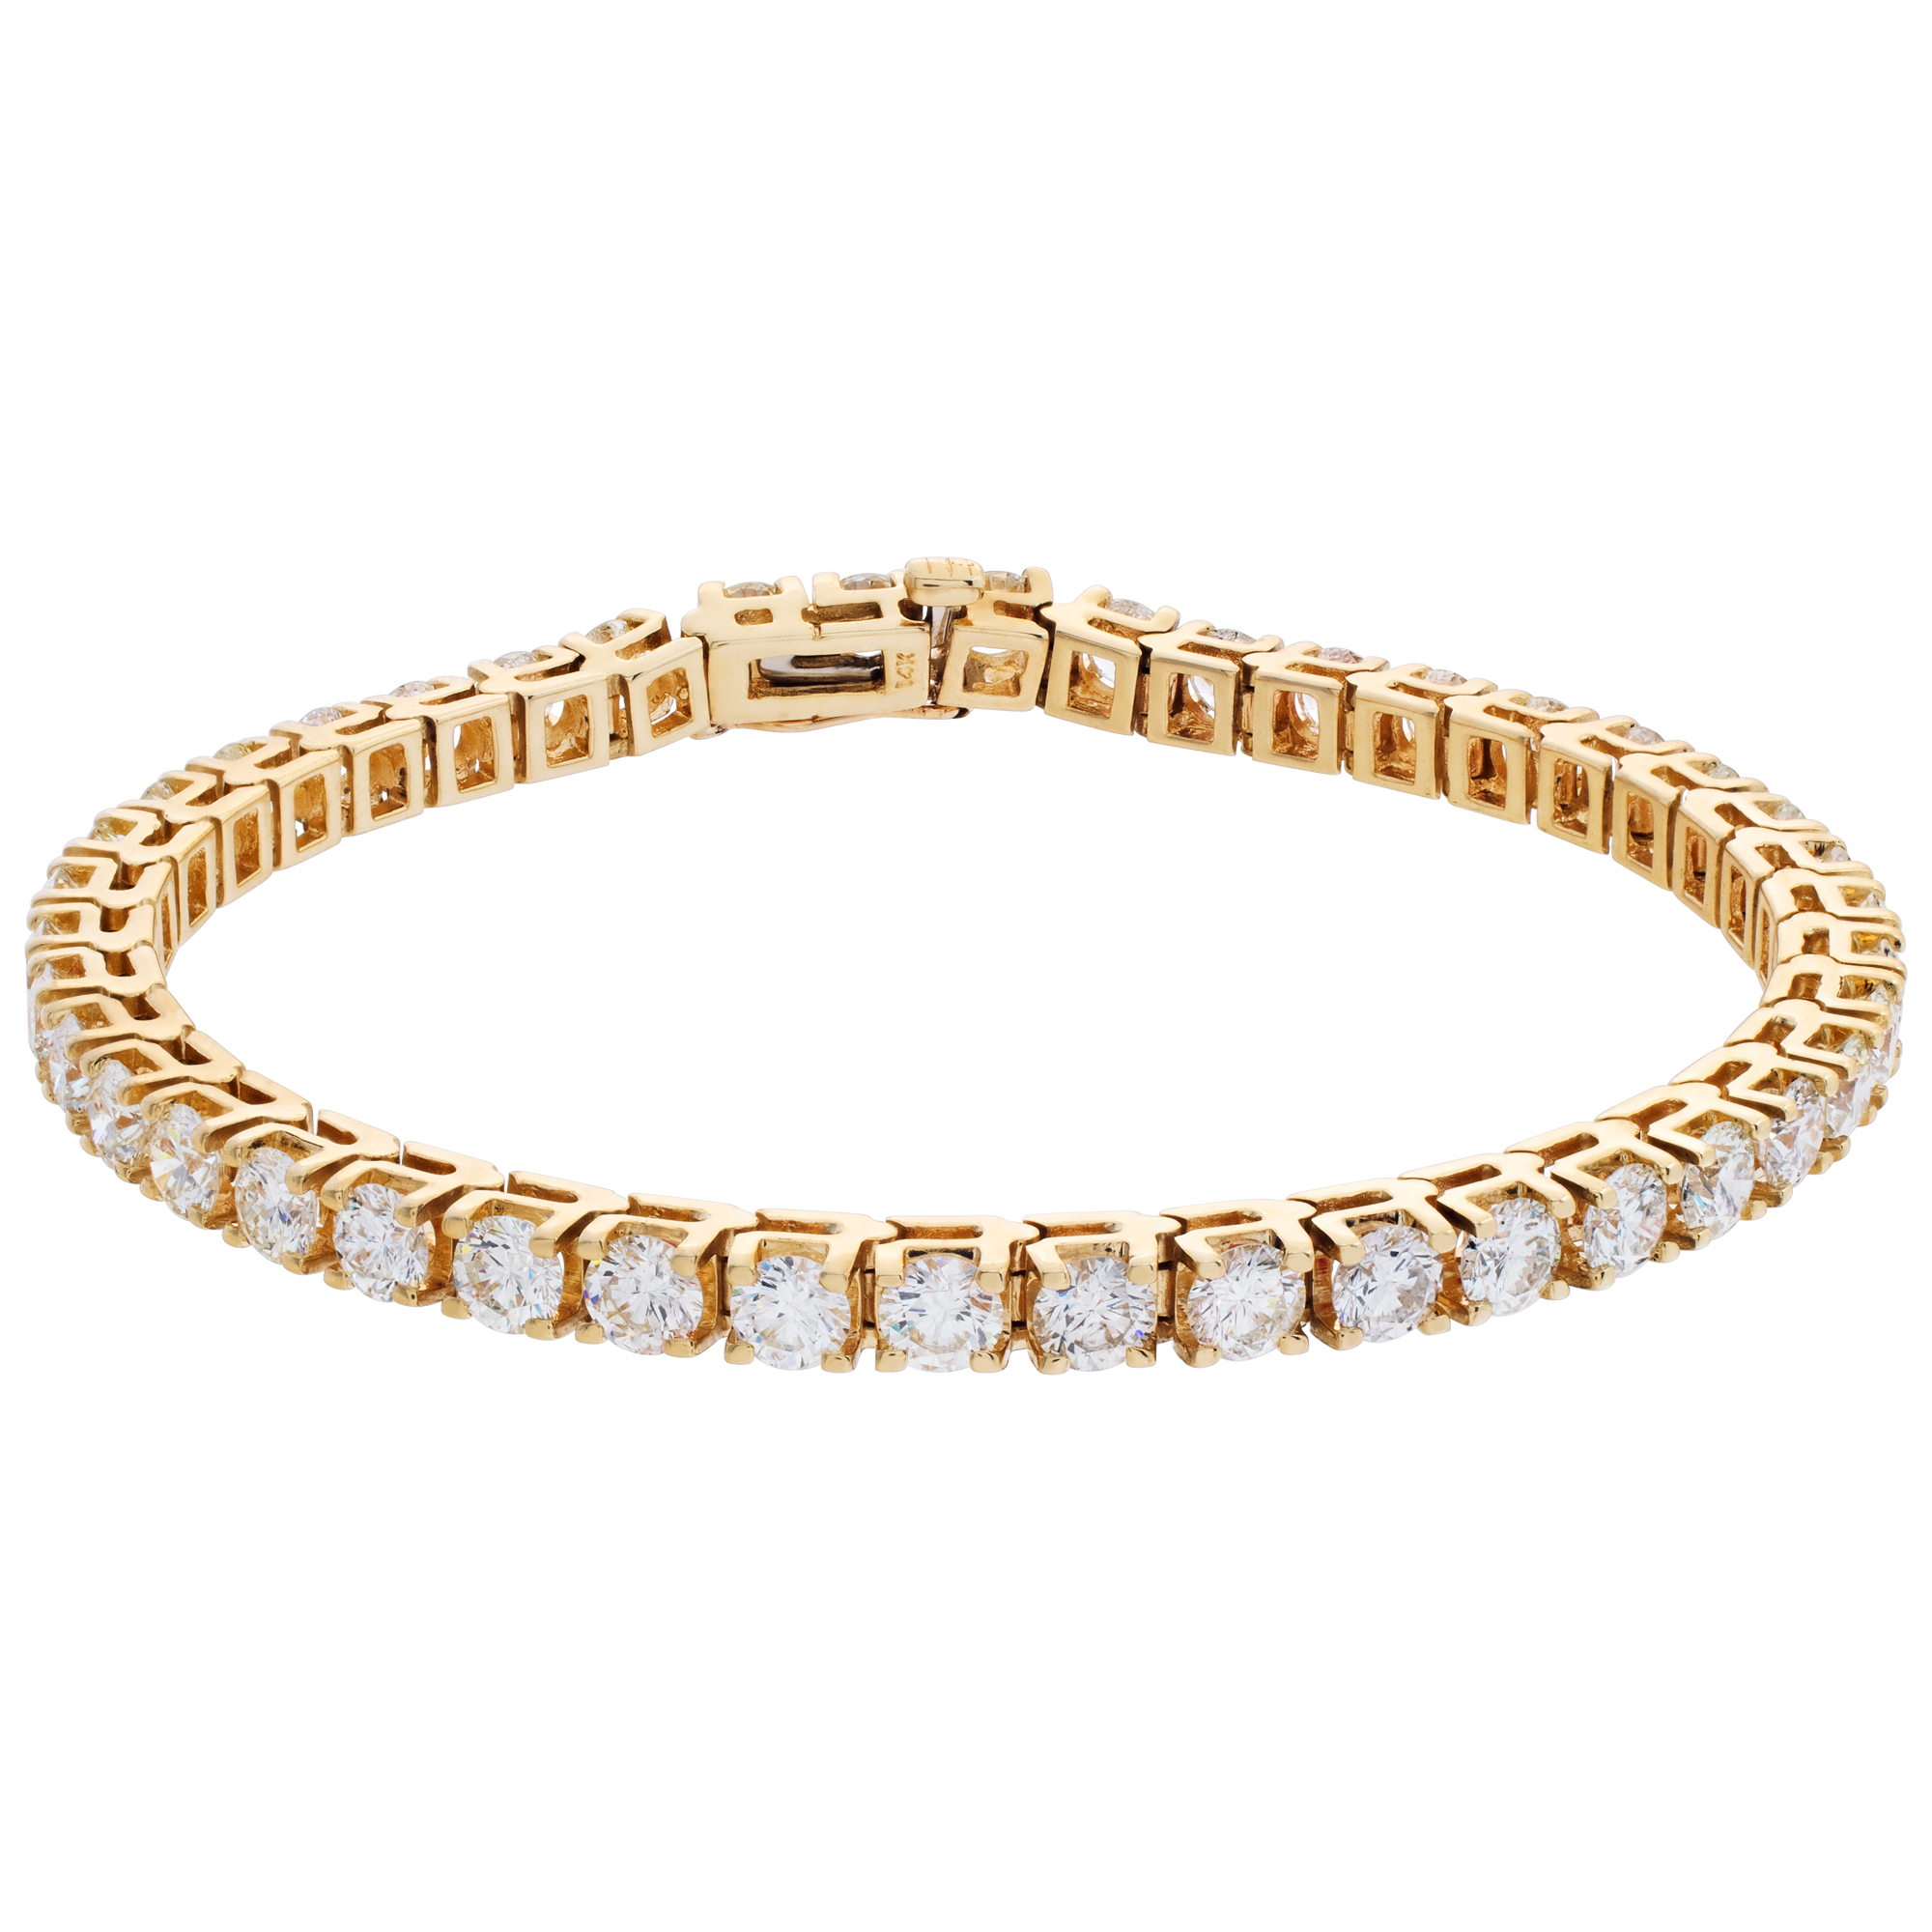 Diamonds line bracelet with approx 8 carats round brilliant cut diamonds, set in 14K yellow gold.